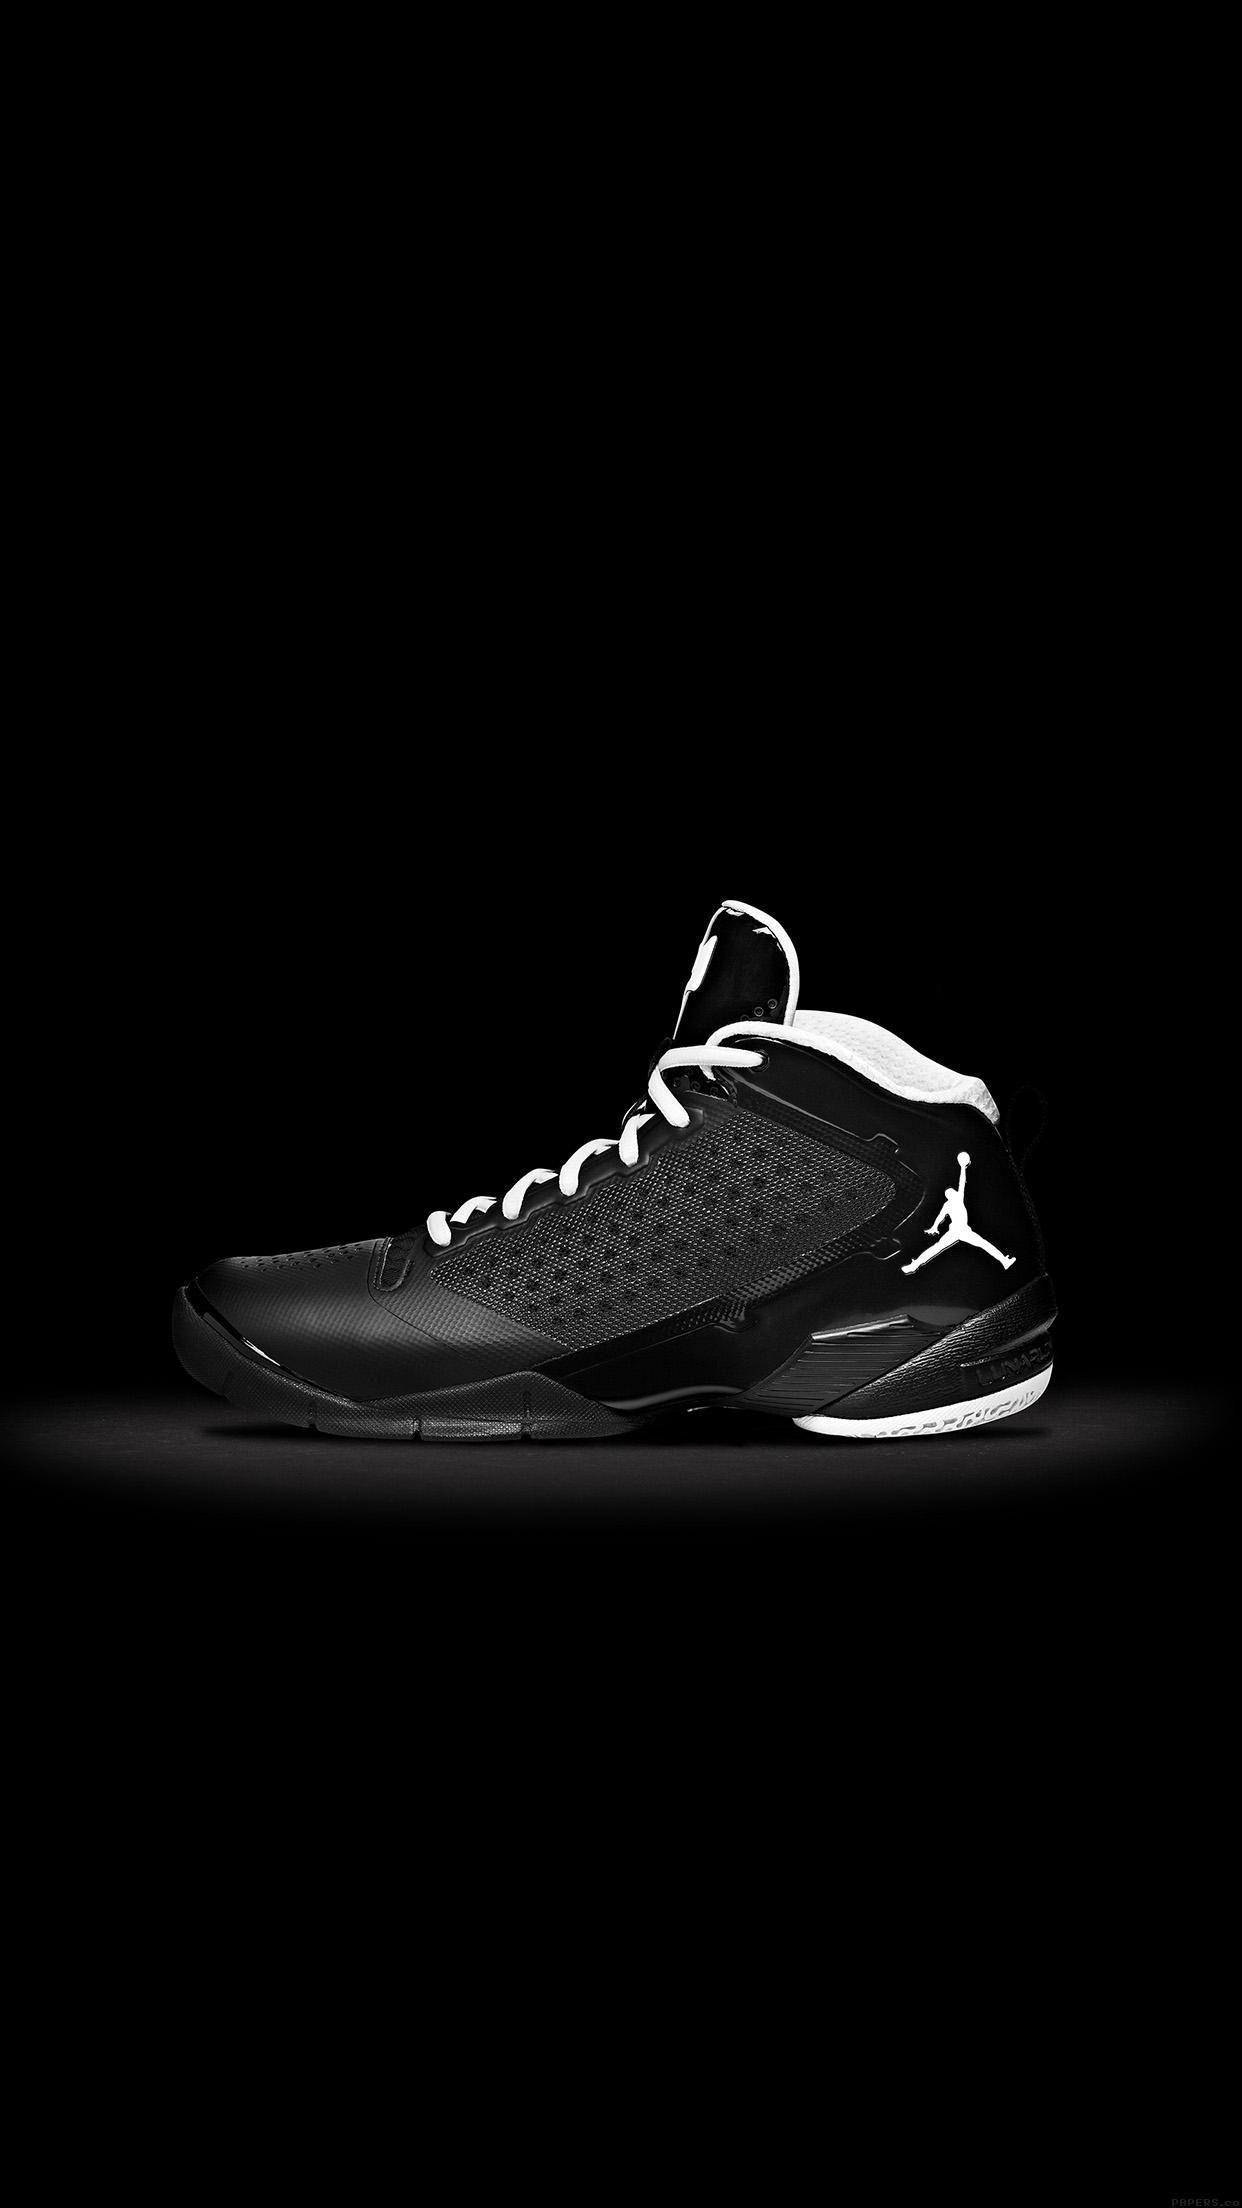 Jordan Fly Wade Nike Shoe Art 6s Plus Wallpaper